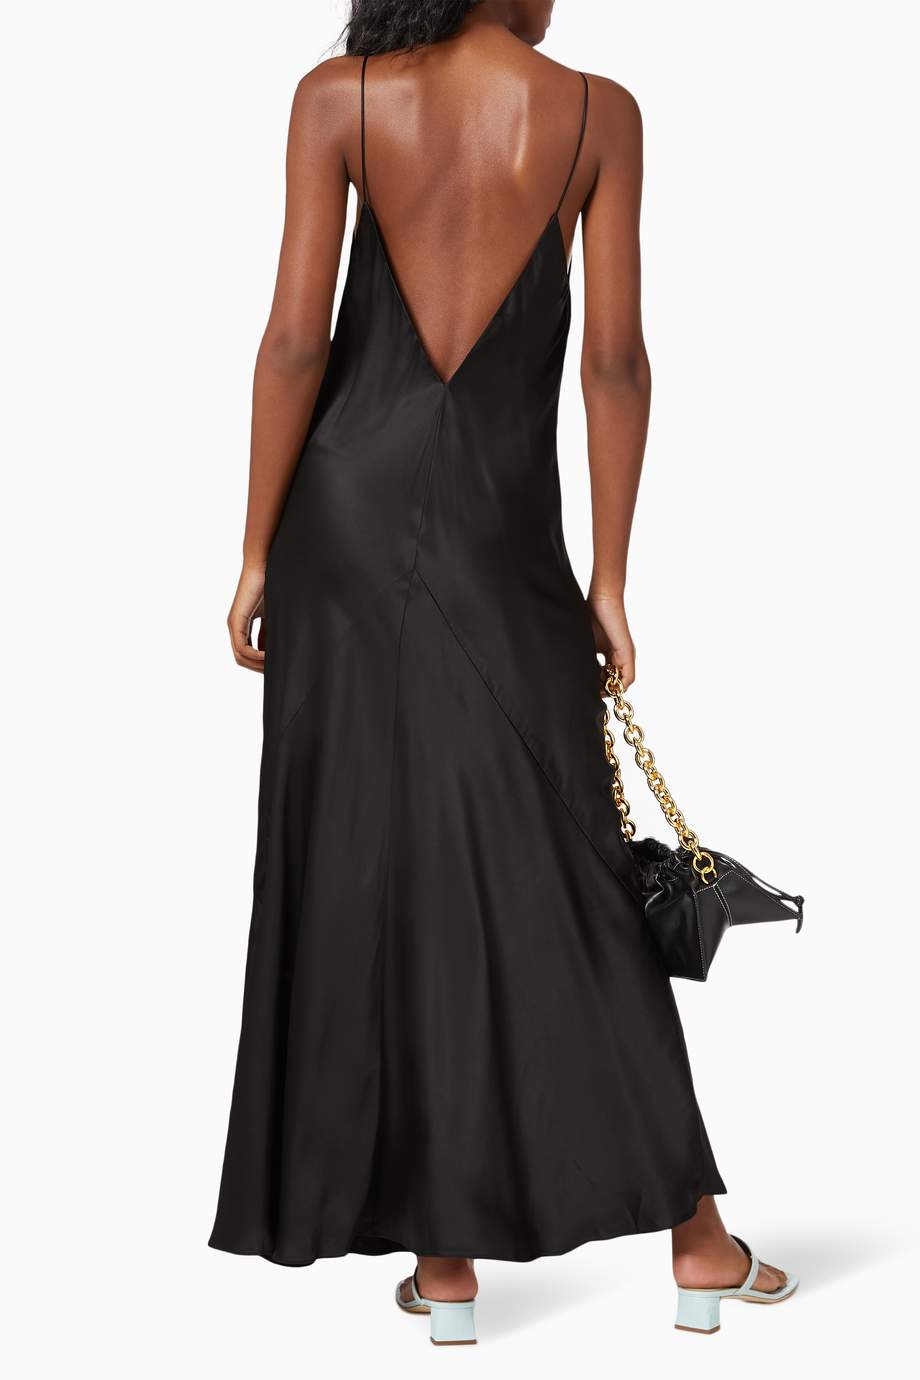 Shop Studio Amelia Black Liquid Bias Satin Slip Dress for Women ...